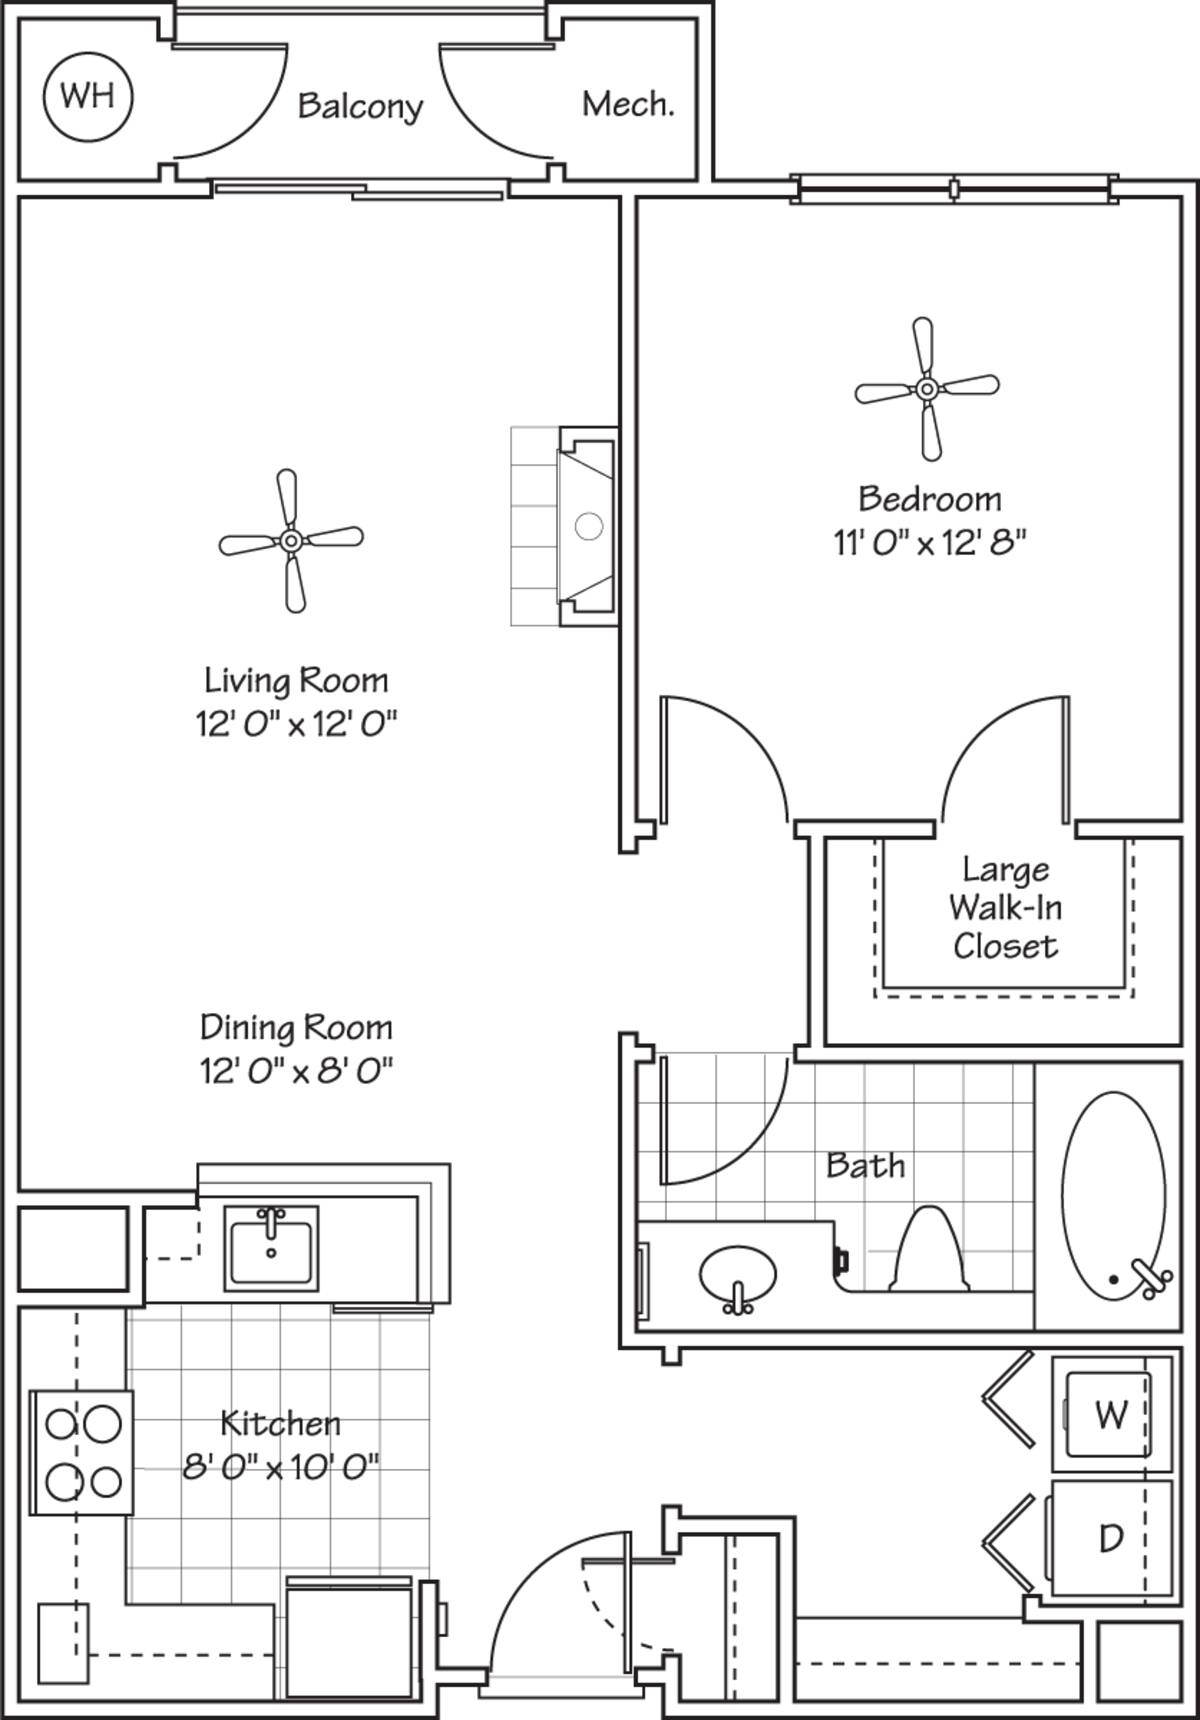 Floorplan diagram for The Allison Loft, showing 1 bedroom